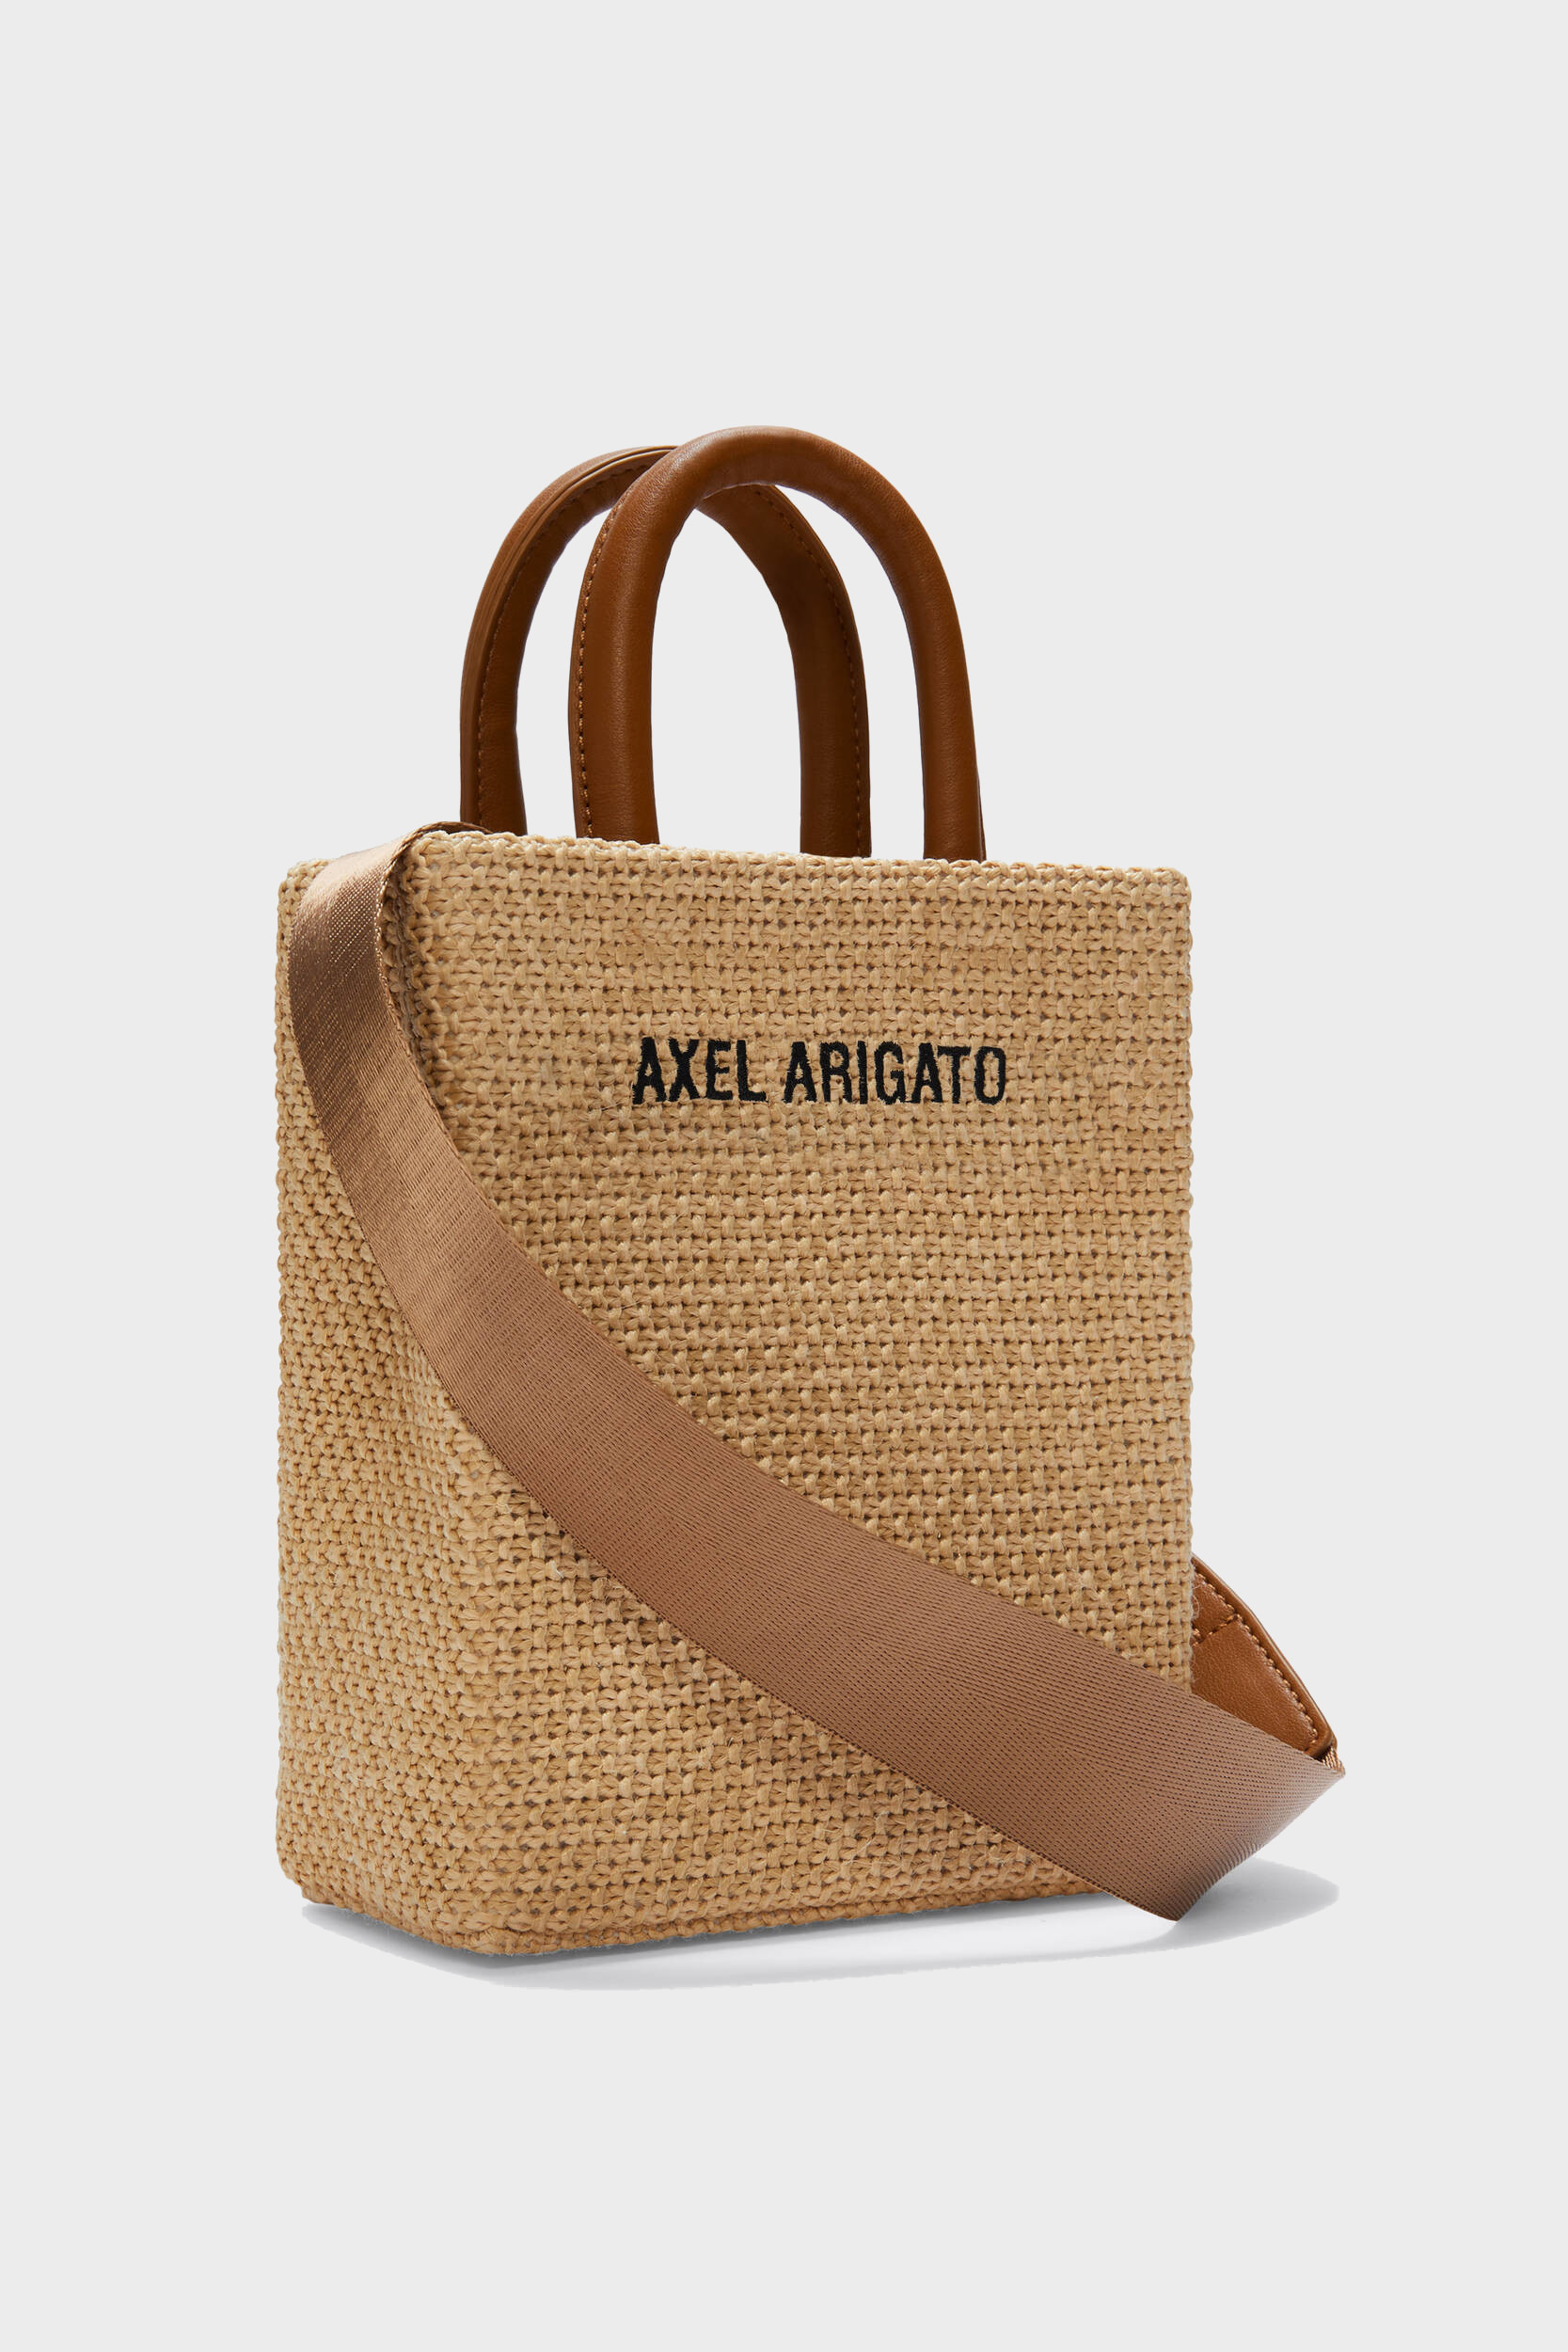 AXEL ARIGATO Shopping Bag Mini in Natural Jute